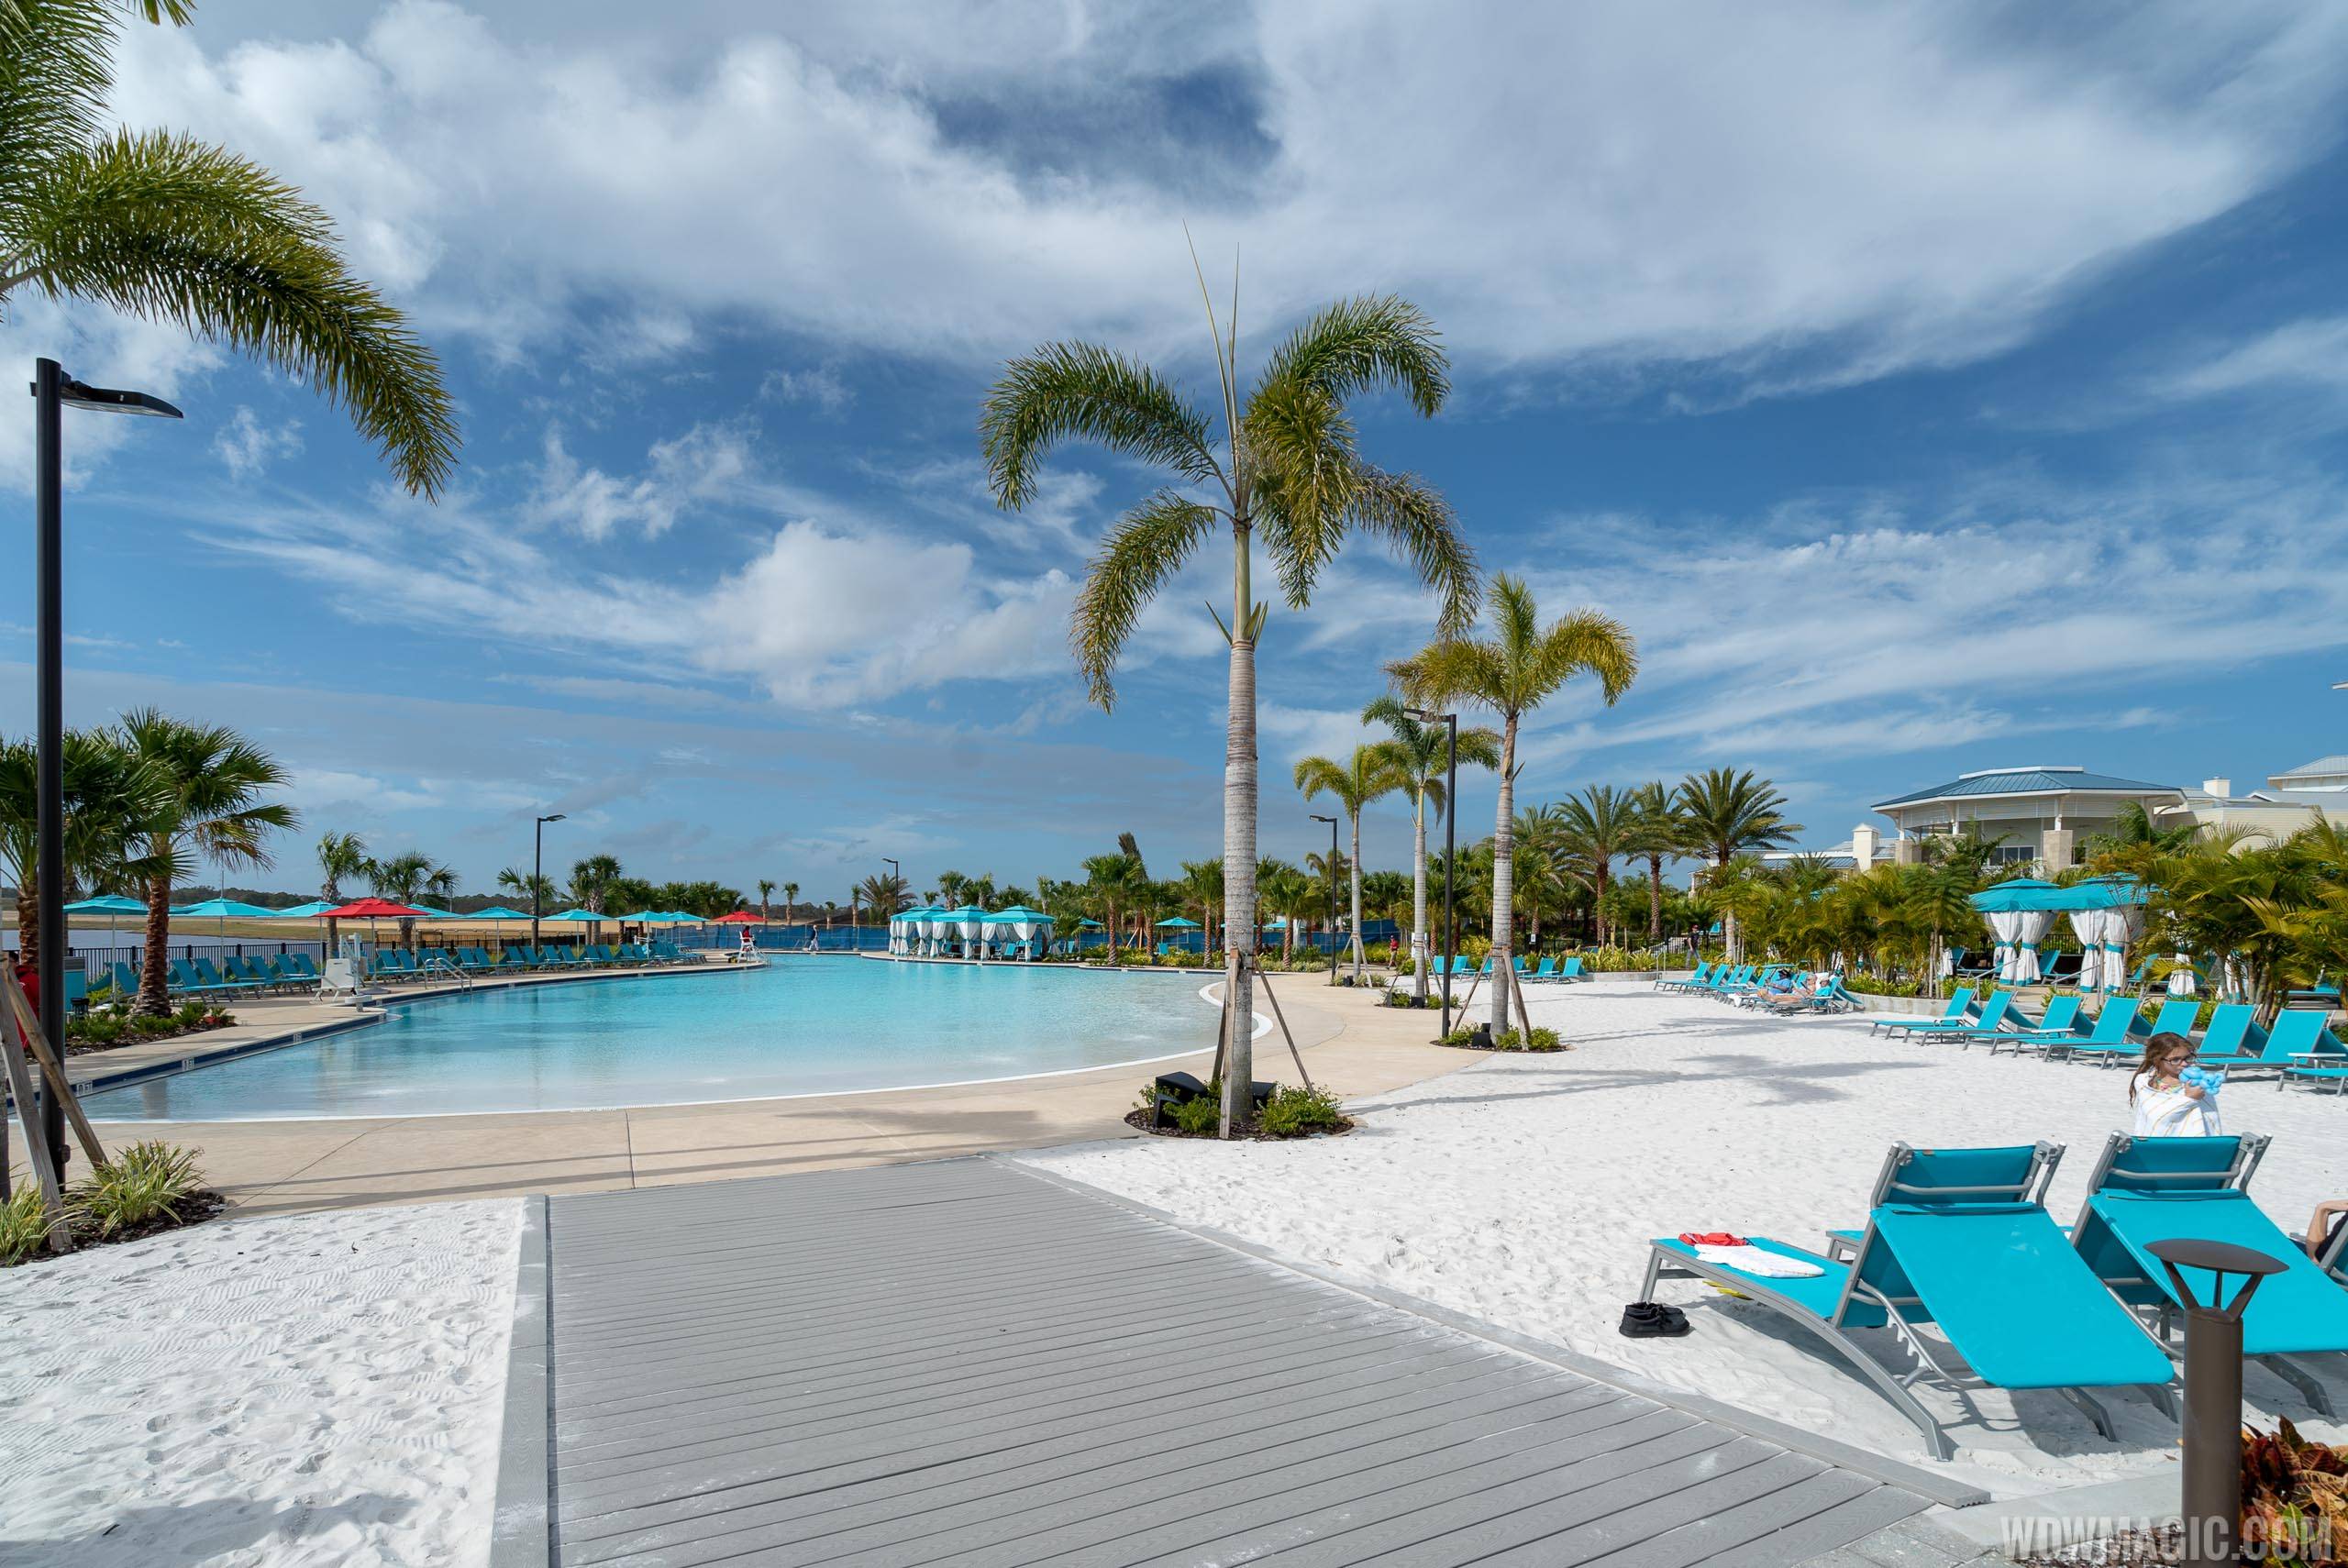 Margaritaville Resort Orlando - Main pool and beach